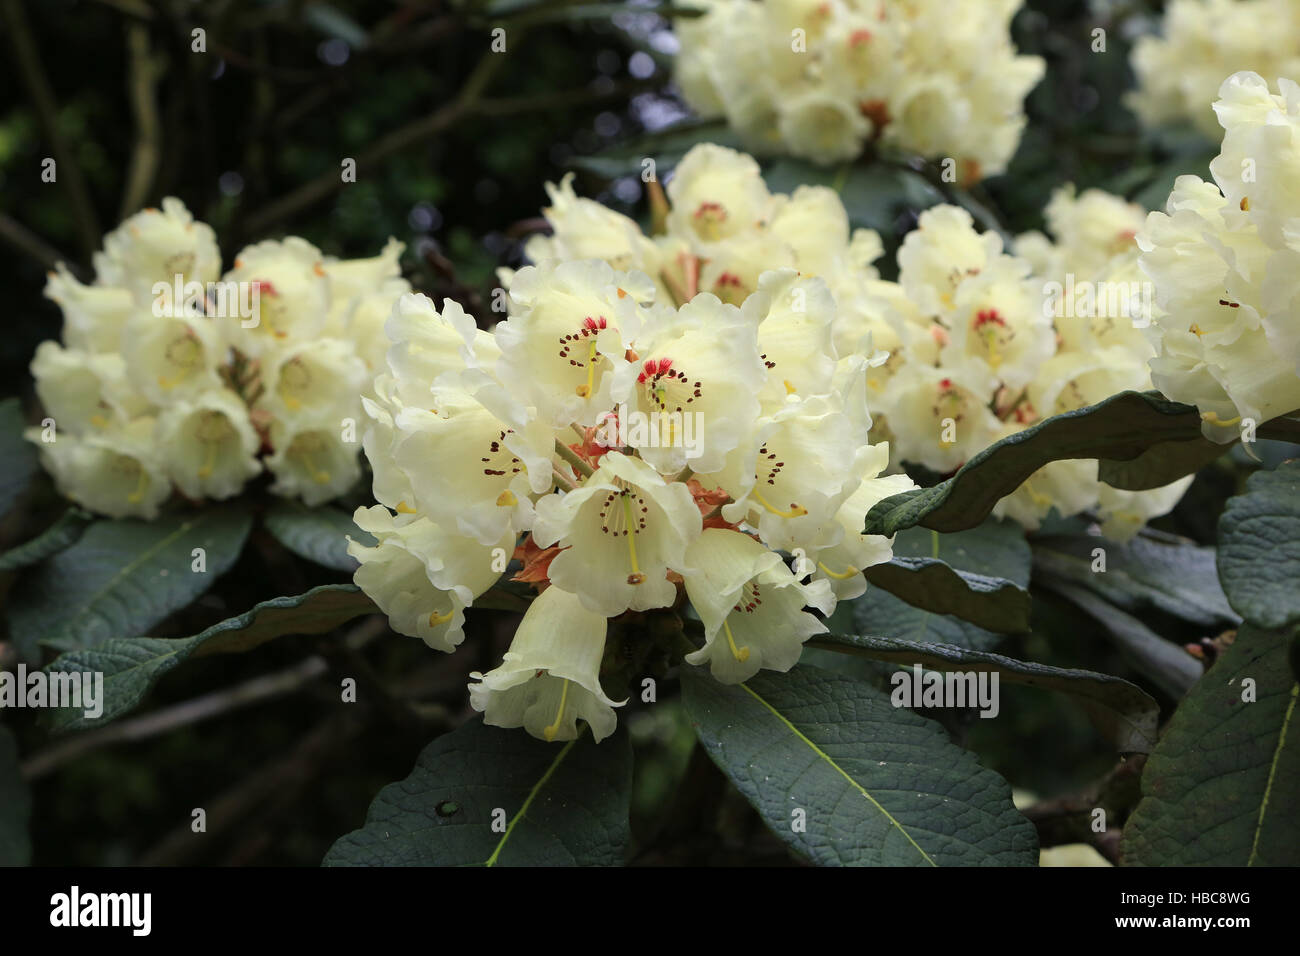 Rhododendron sinofalconeri Stock Photo